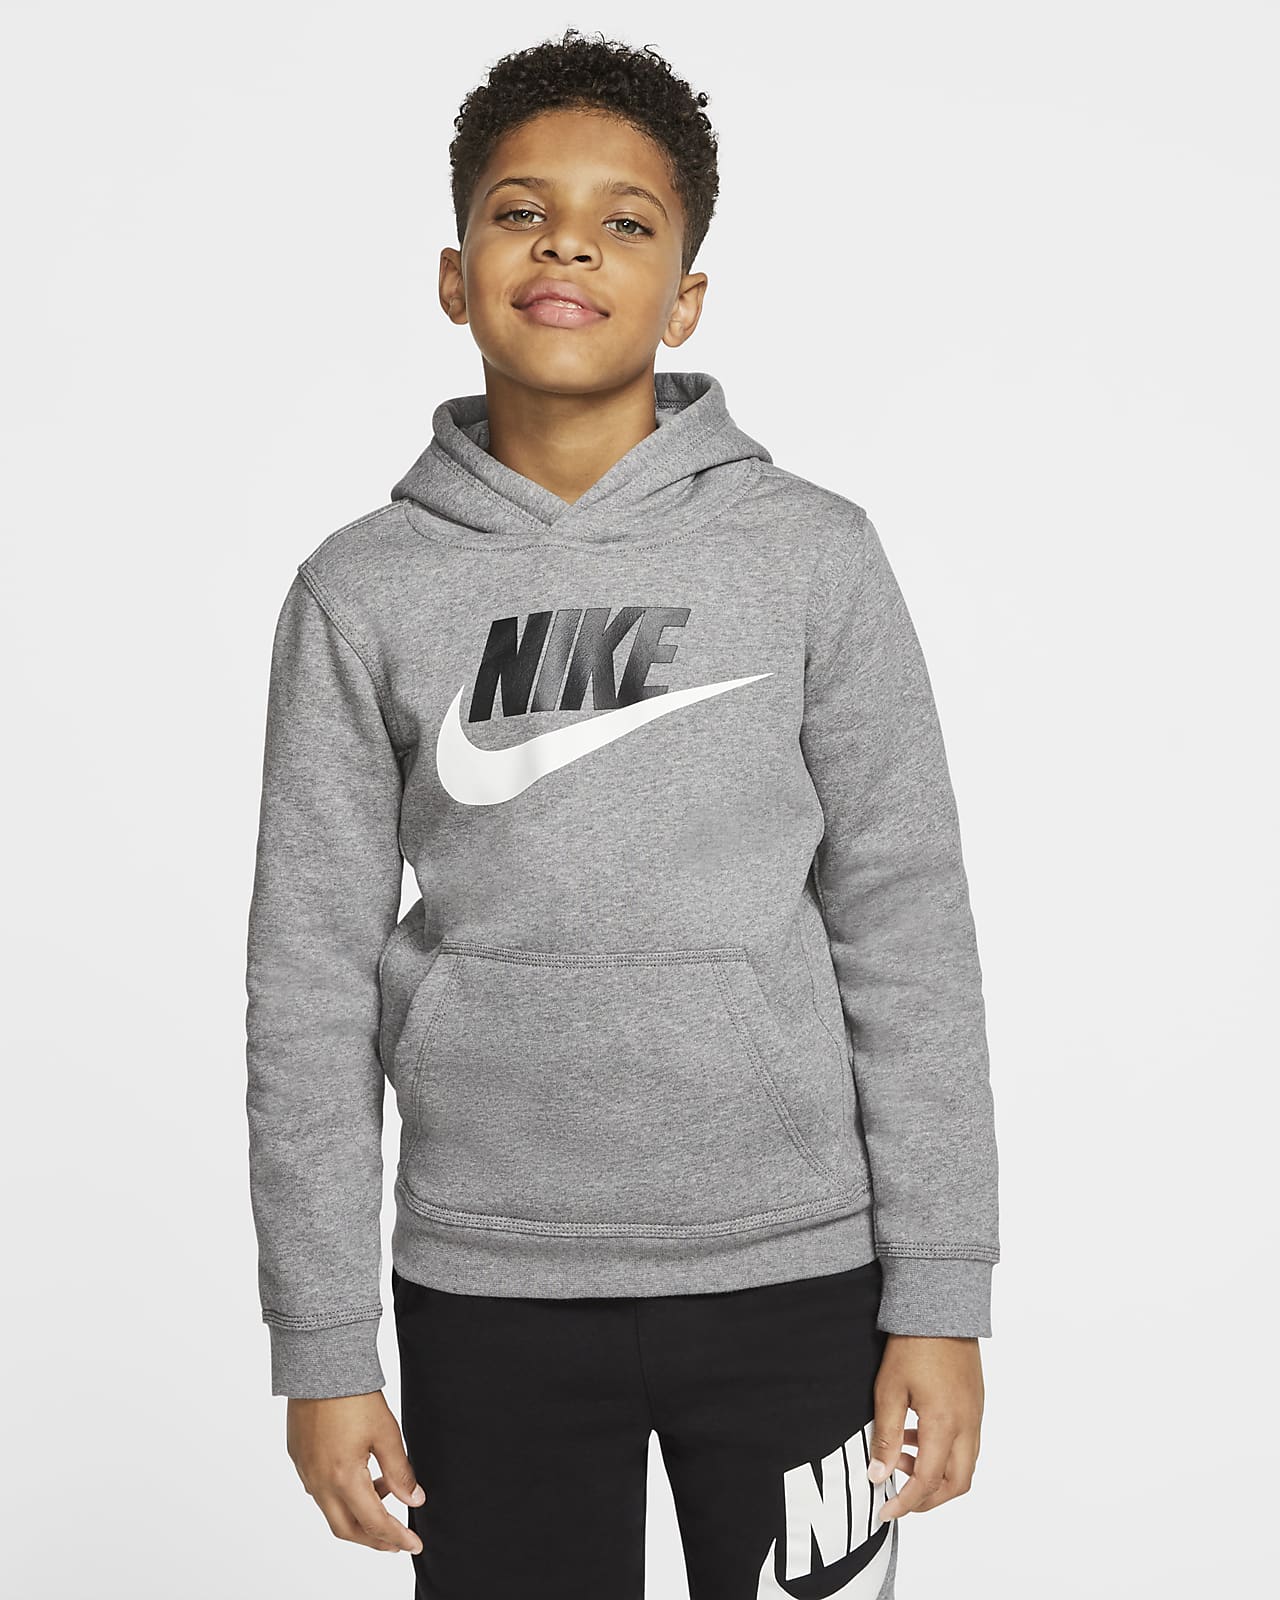 Nike Boy's Club Fleece Hoodie